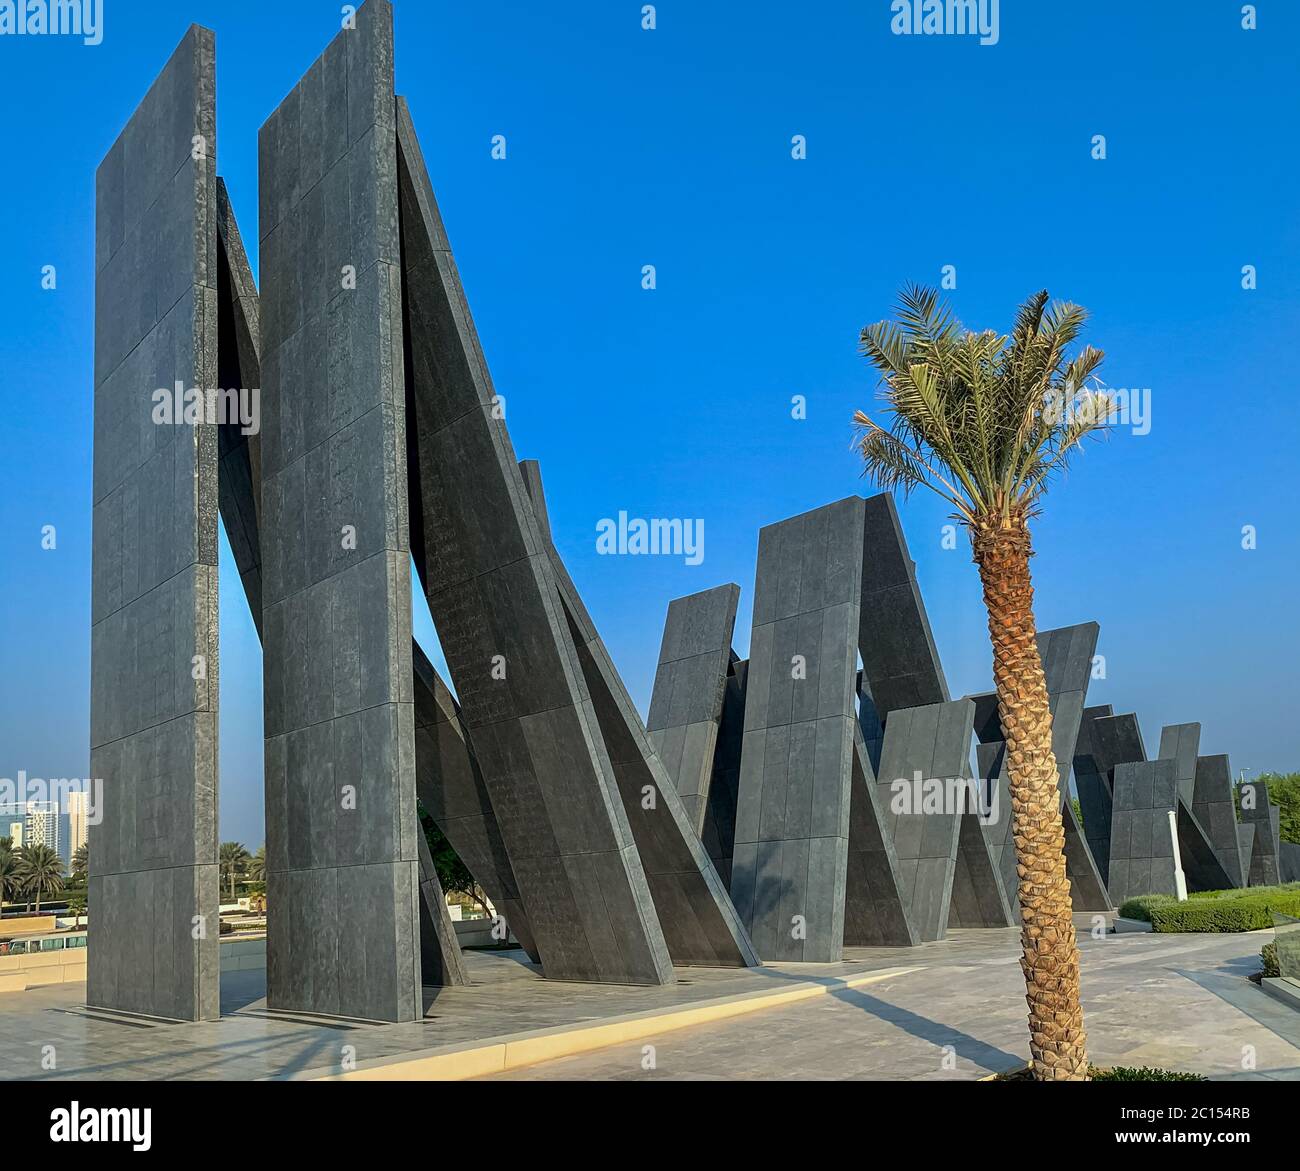 middle east 14 june 2020 abu dhabi, leaning pillars of war memorial united arab emirates Stock Photo